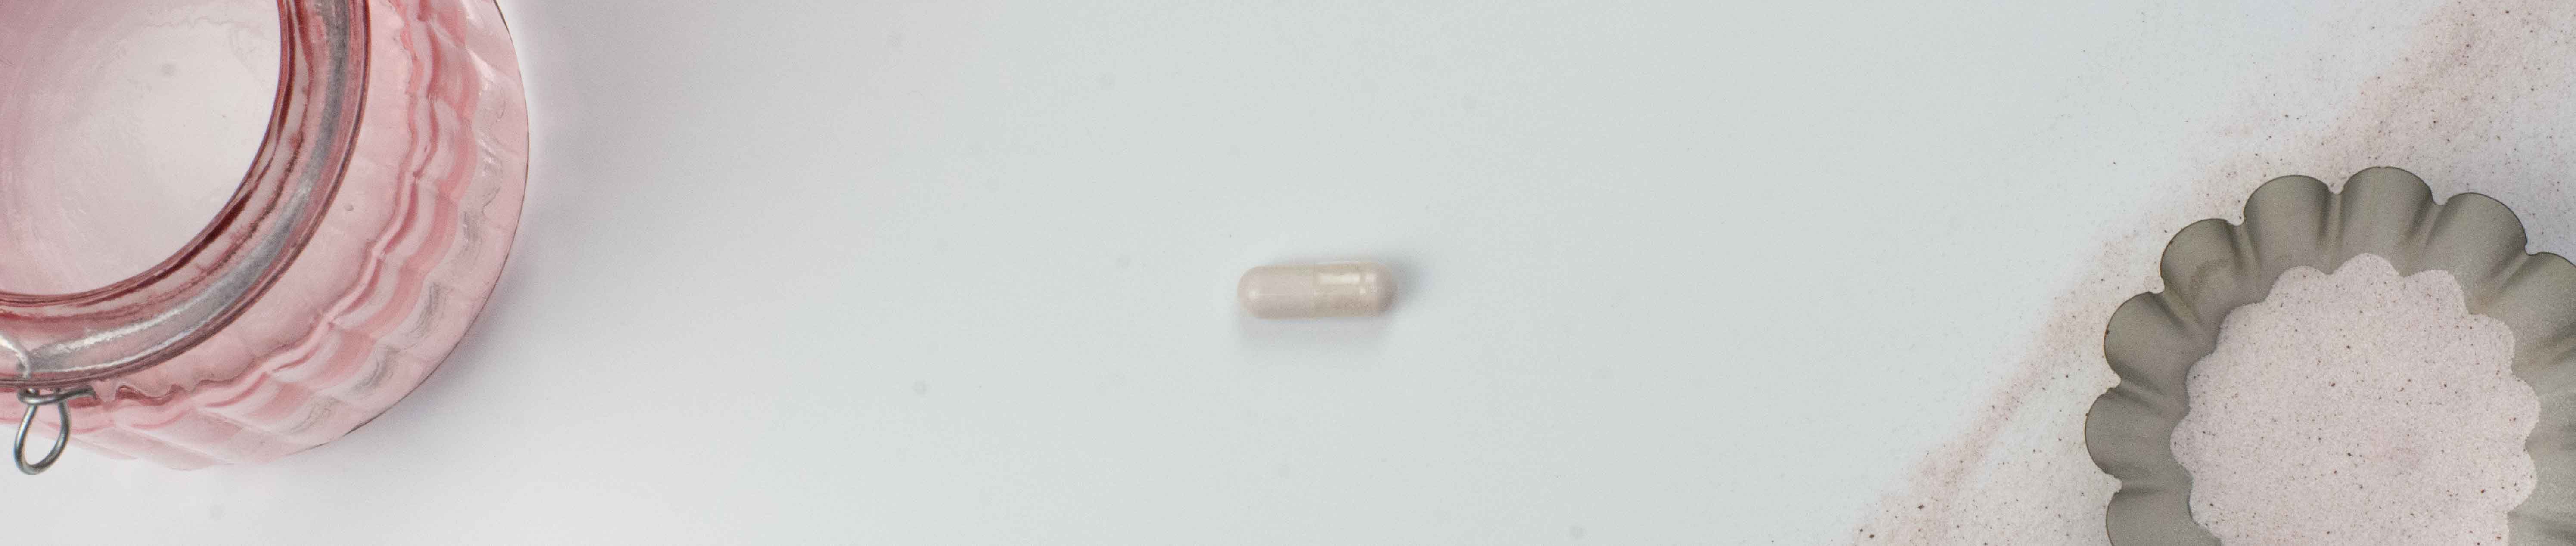 quality Vitamin B12 supplement pink glass